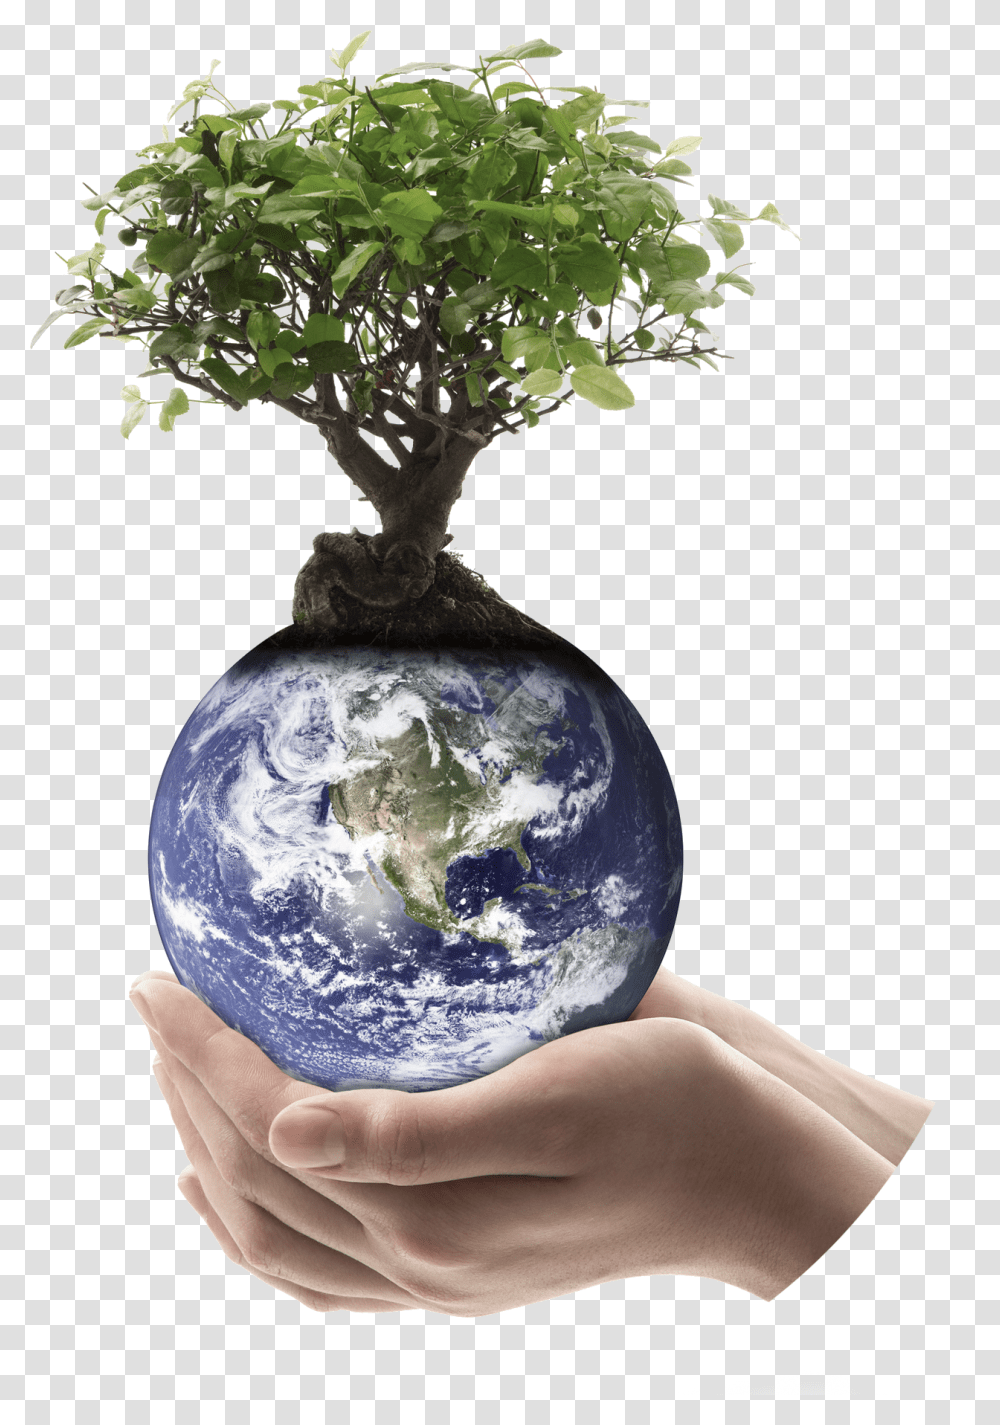 Trees Used For Making Paper, Plant, Potted Plant, Vase, Jar Transparent Png